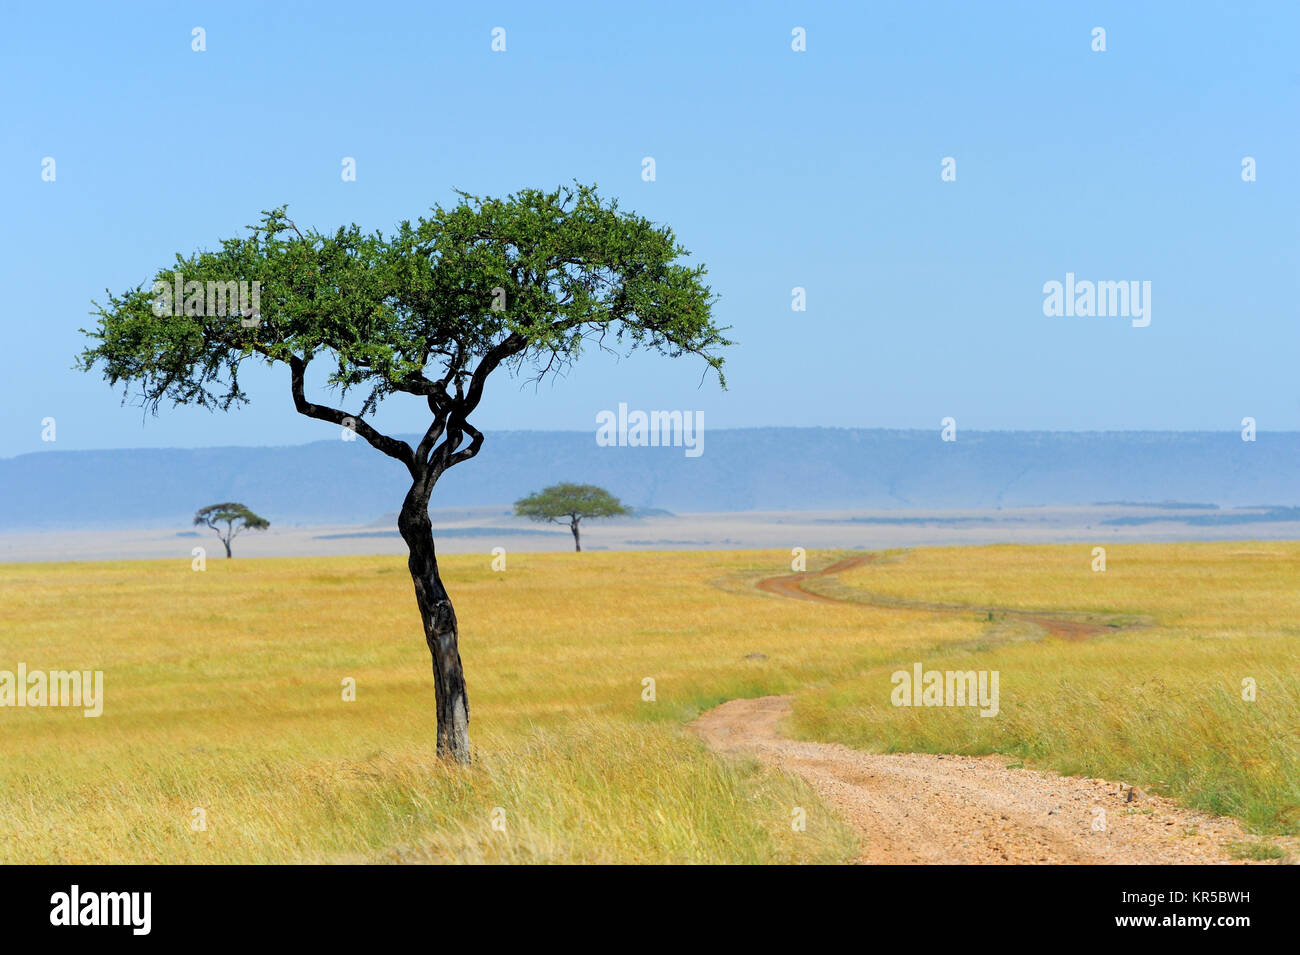 Savannah landscape in the national park in kenya Stock Photo